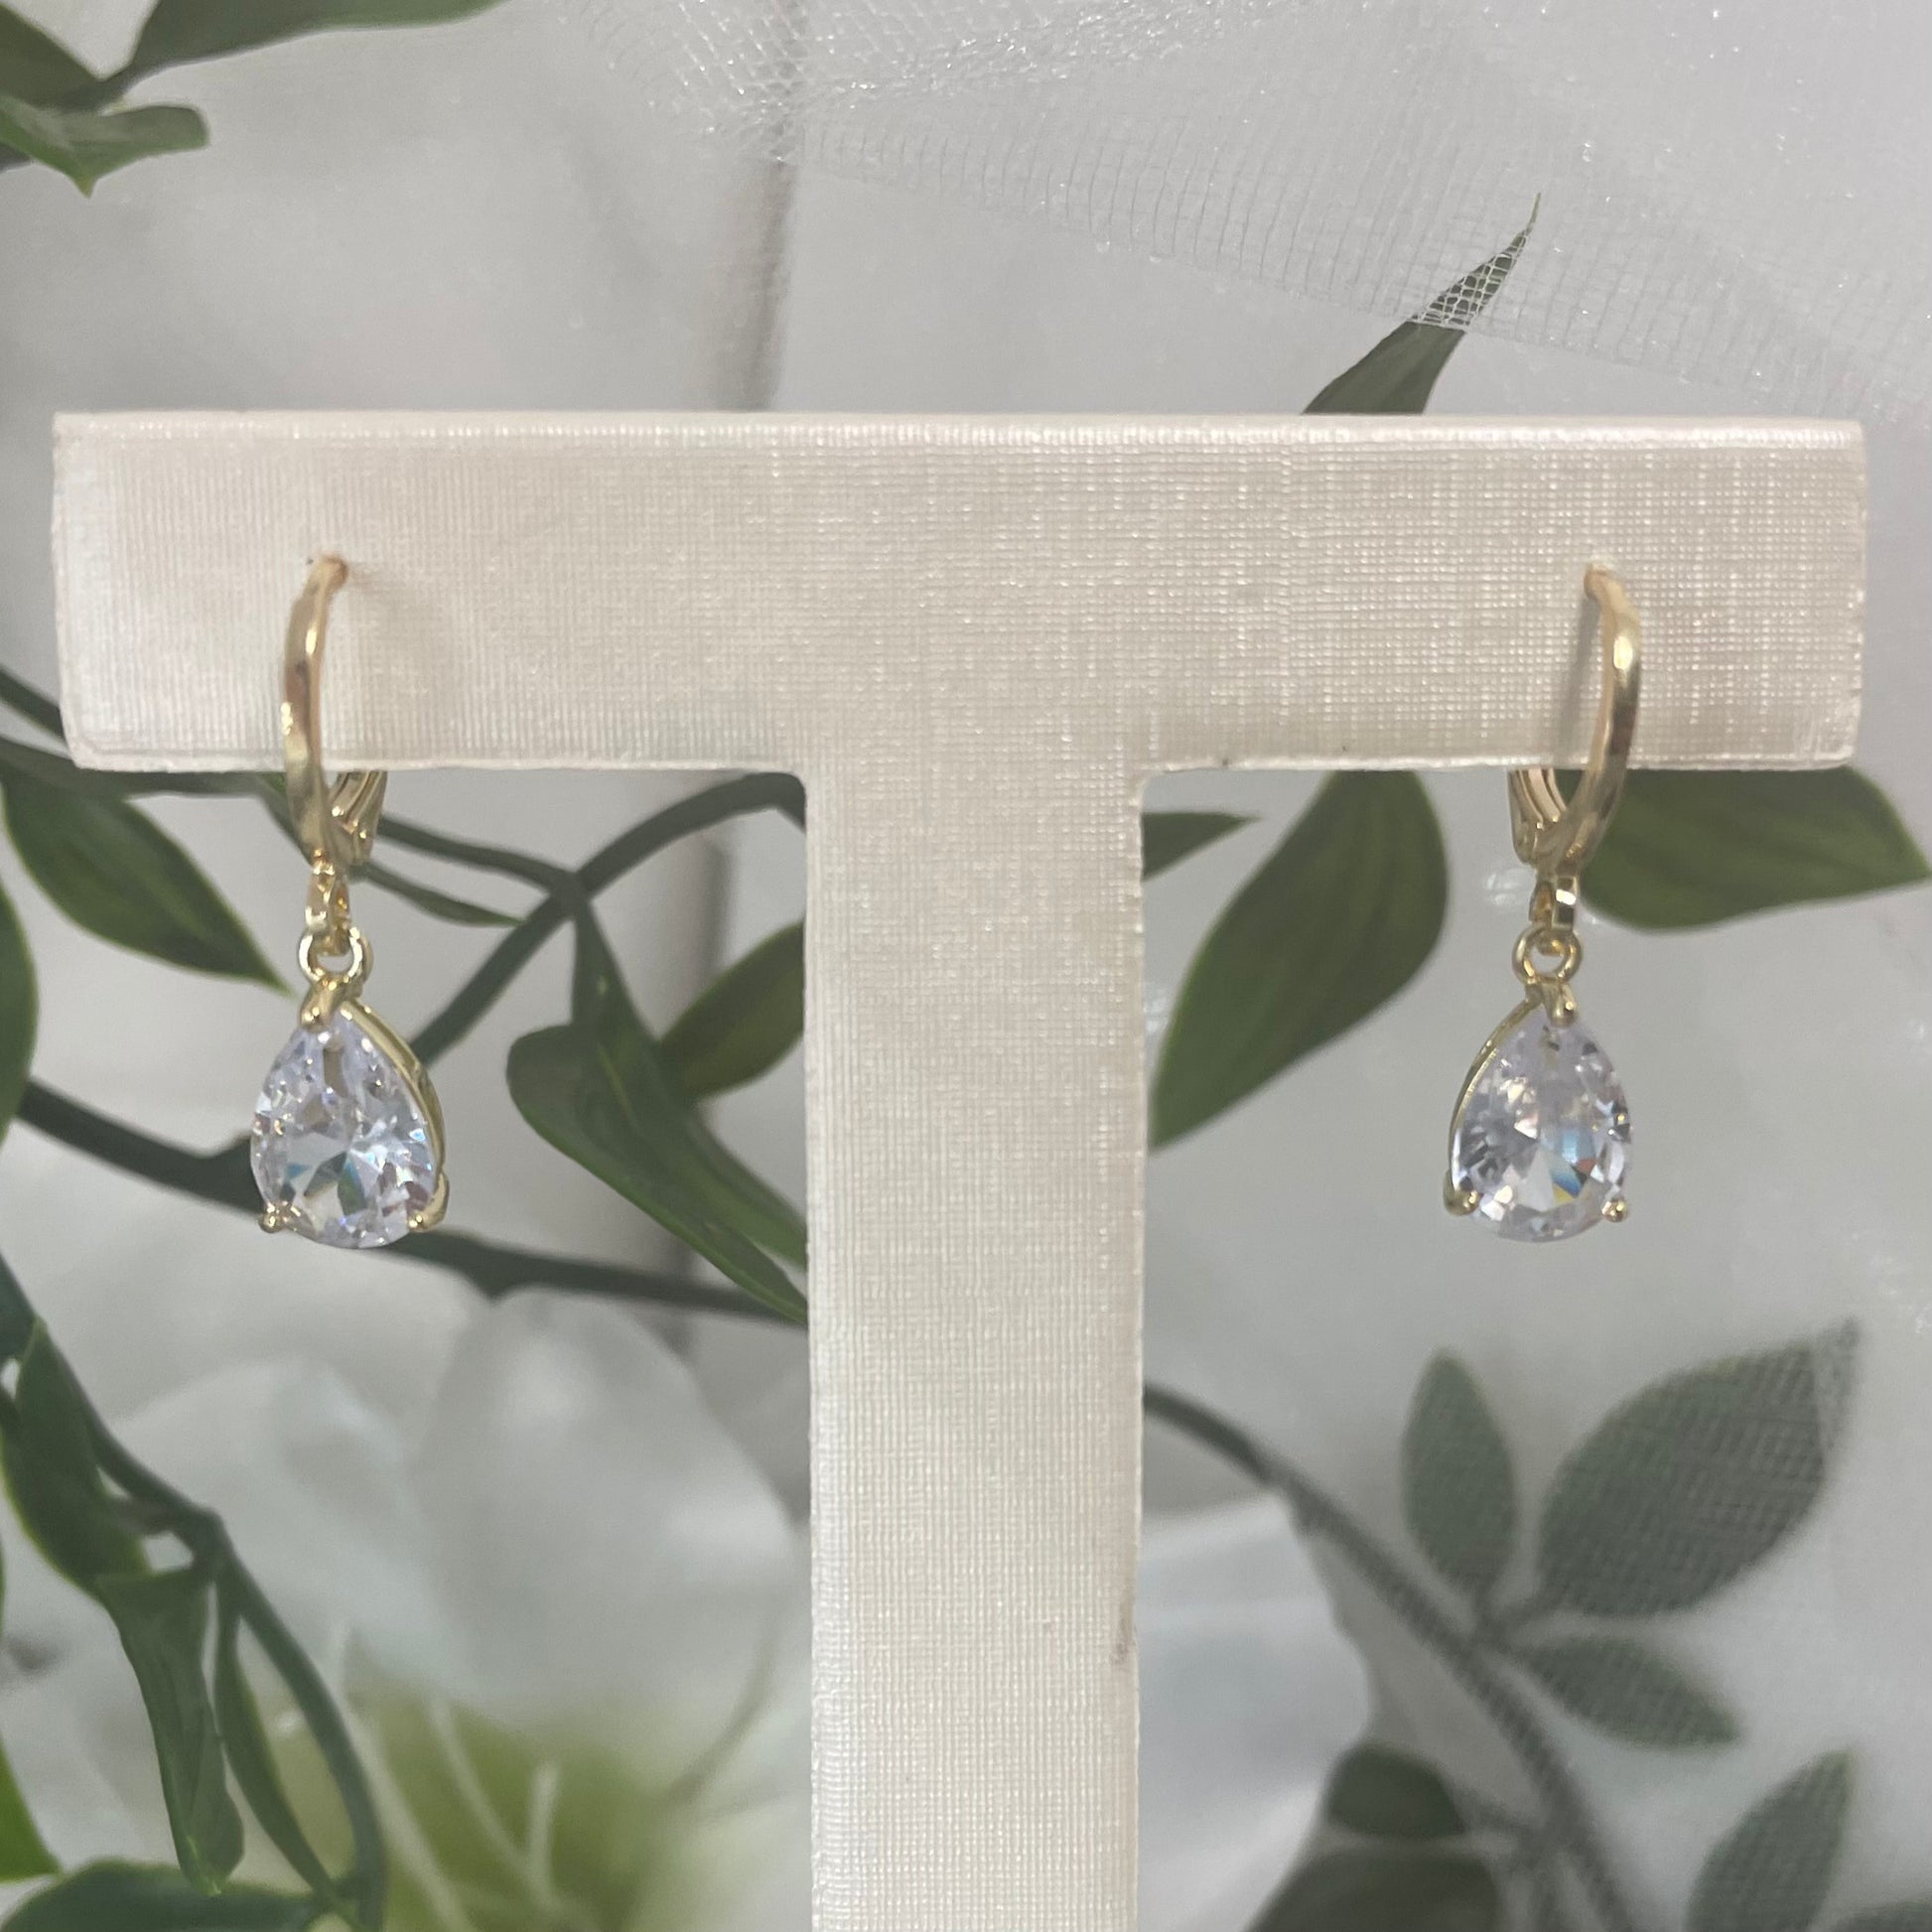 Sabrina Gold Wedding Earrings featuring a dangle hoop design with a cubic zirconia teardrop.